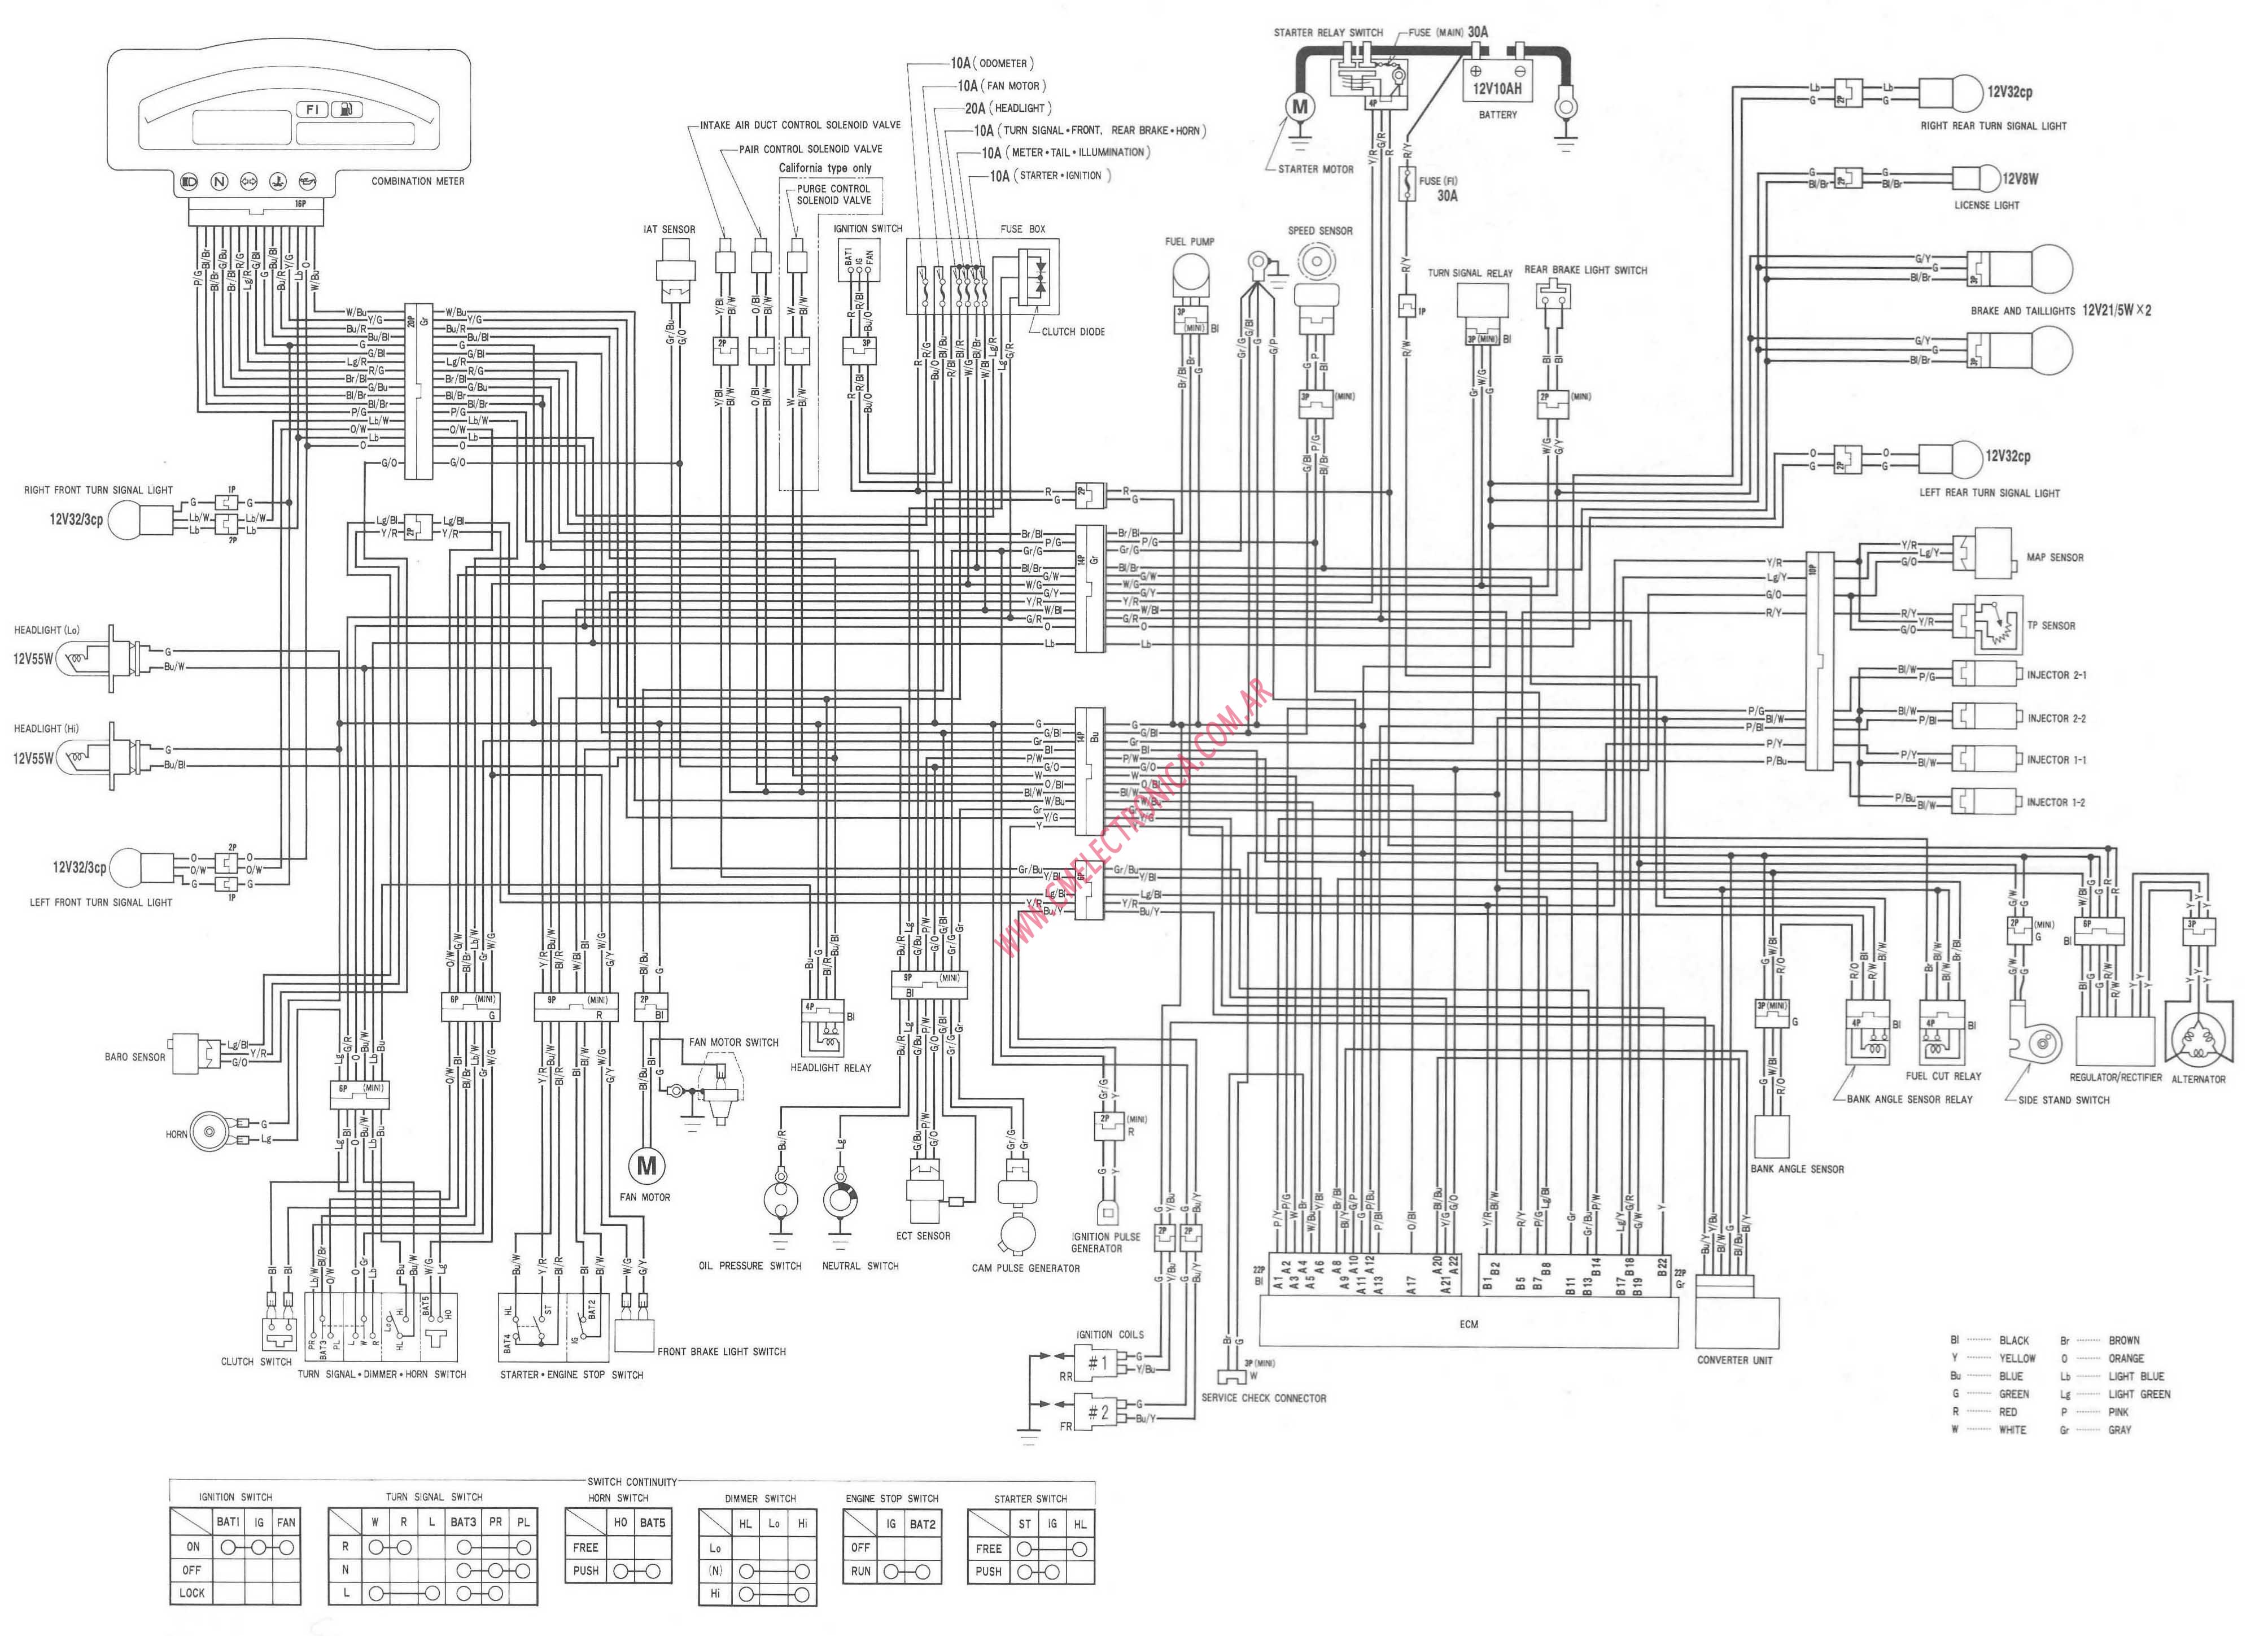 DIAGRAM] 2000 Rc51 Wiring Diagram FULL Version HD Quality Wiring Diagram -  DIAGRAMREF.MOTOCLUBGARGAROS.IT Free Honda Wiring Diagram Diagram Database - motoclubgargaros.it